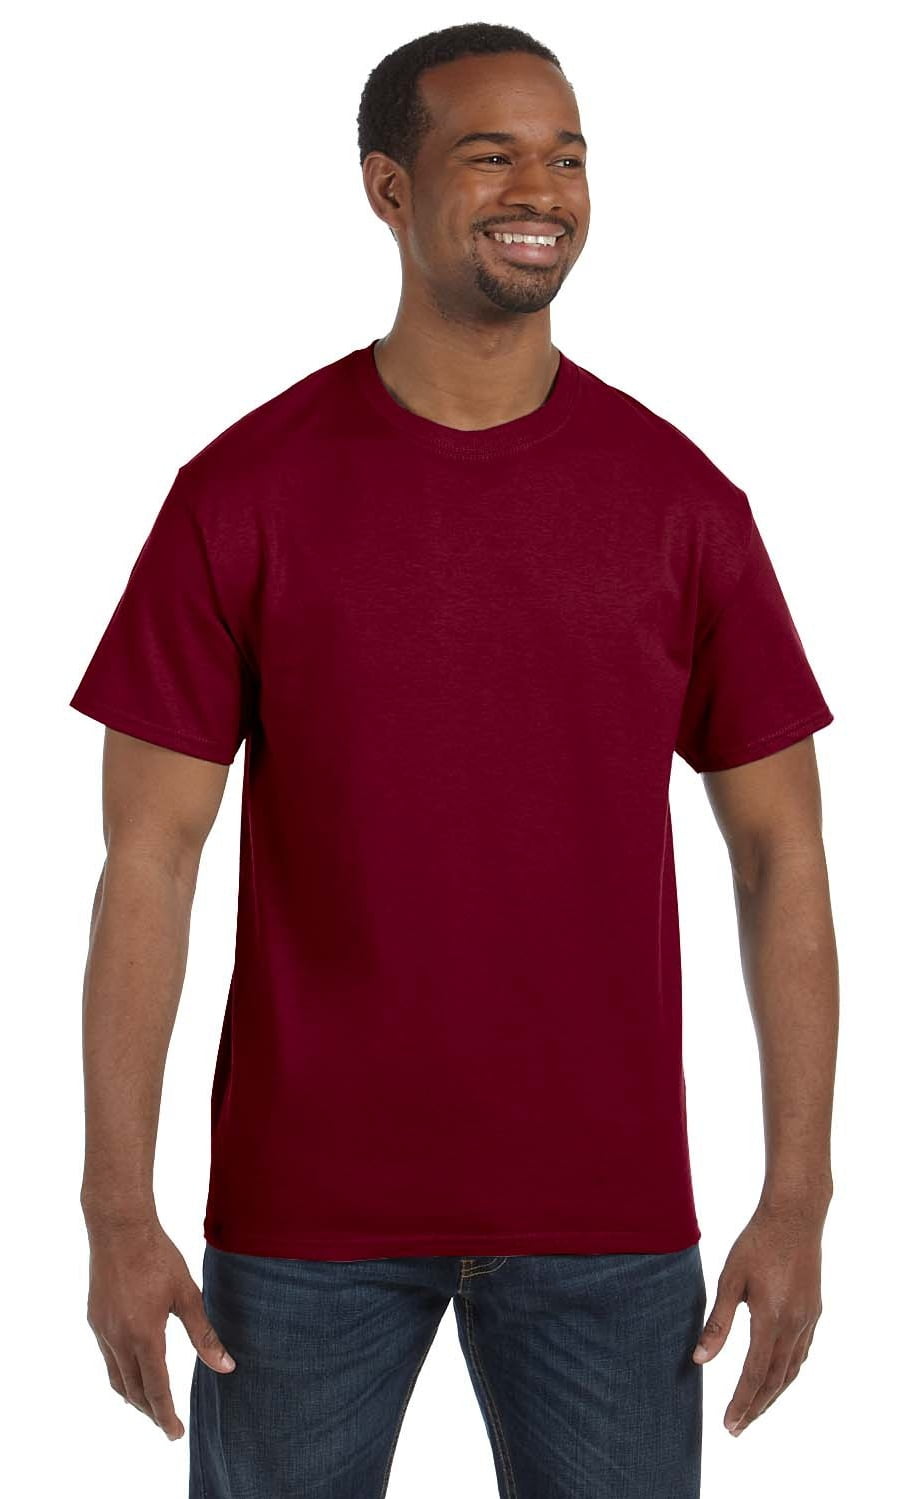 Moisture-Wicking Adult Unisex Garnet Red Cotton-Blend T-Shirts STOCK CLEARANCE!!